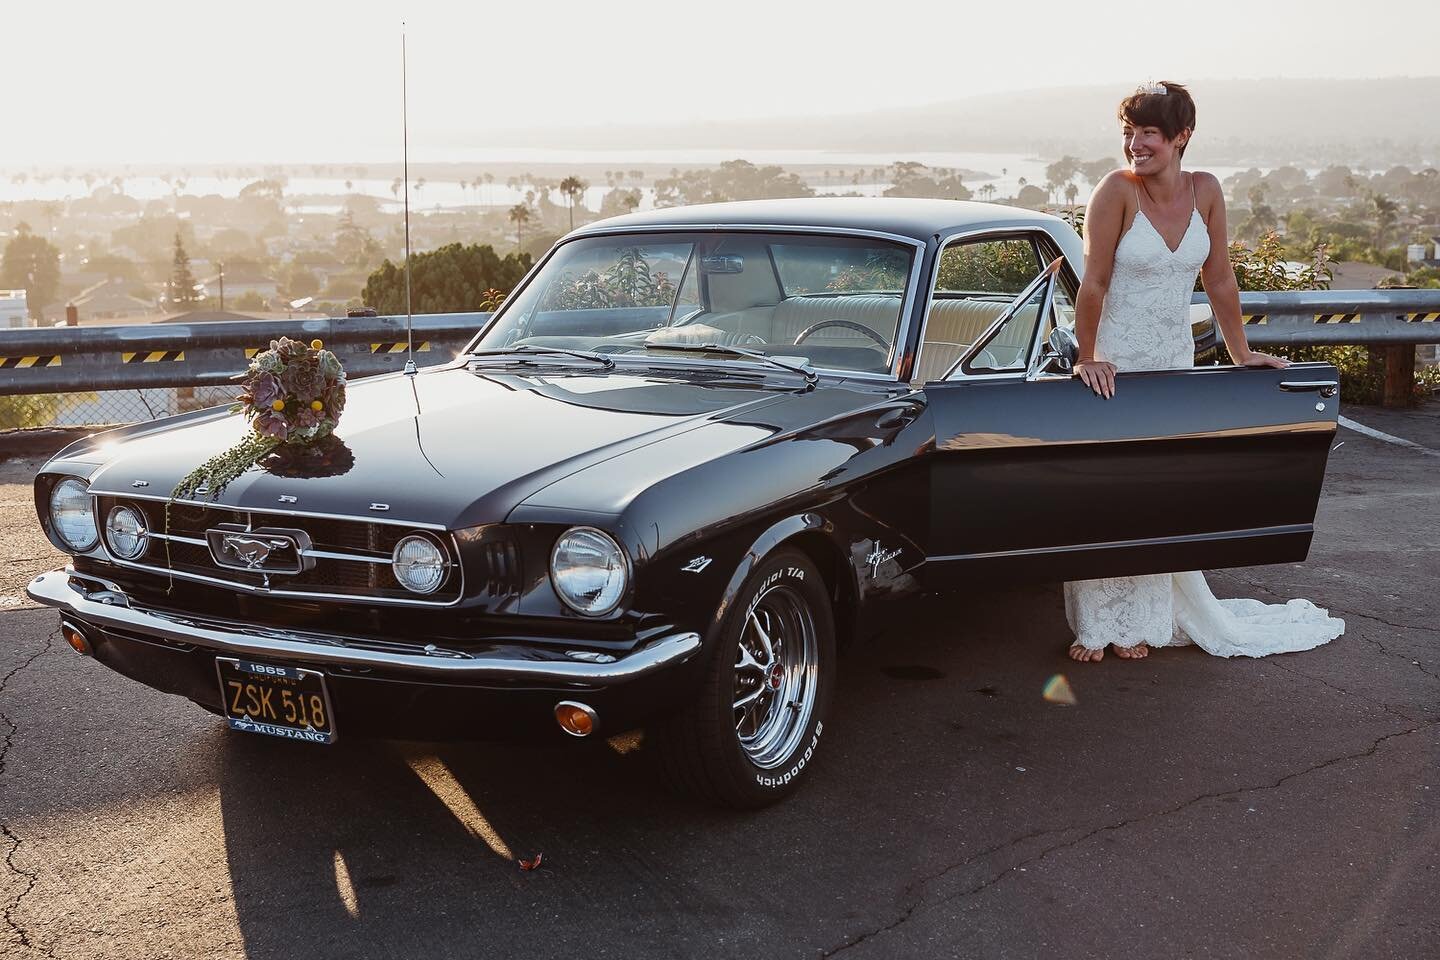 Andy + Harmony, in San Diego⁠
.⁠
.⁠
.⁠
.⁠
.⁠
.⁠
.⁠
.⁠
.⁠
.⁠
#weddingphotos  #weddingphotography⠀⠀⠀⠀⁣⠀⁣⠀⁠⠀⁠
#wedding #lajollaweddingphotographer #carlsbadweddingphotographer⠀⁣⠀⁣⠀⁠⠀⁠
#engagement  #sandiegoweddingphotographer #sandiegoweddingphotography